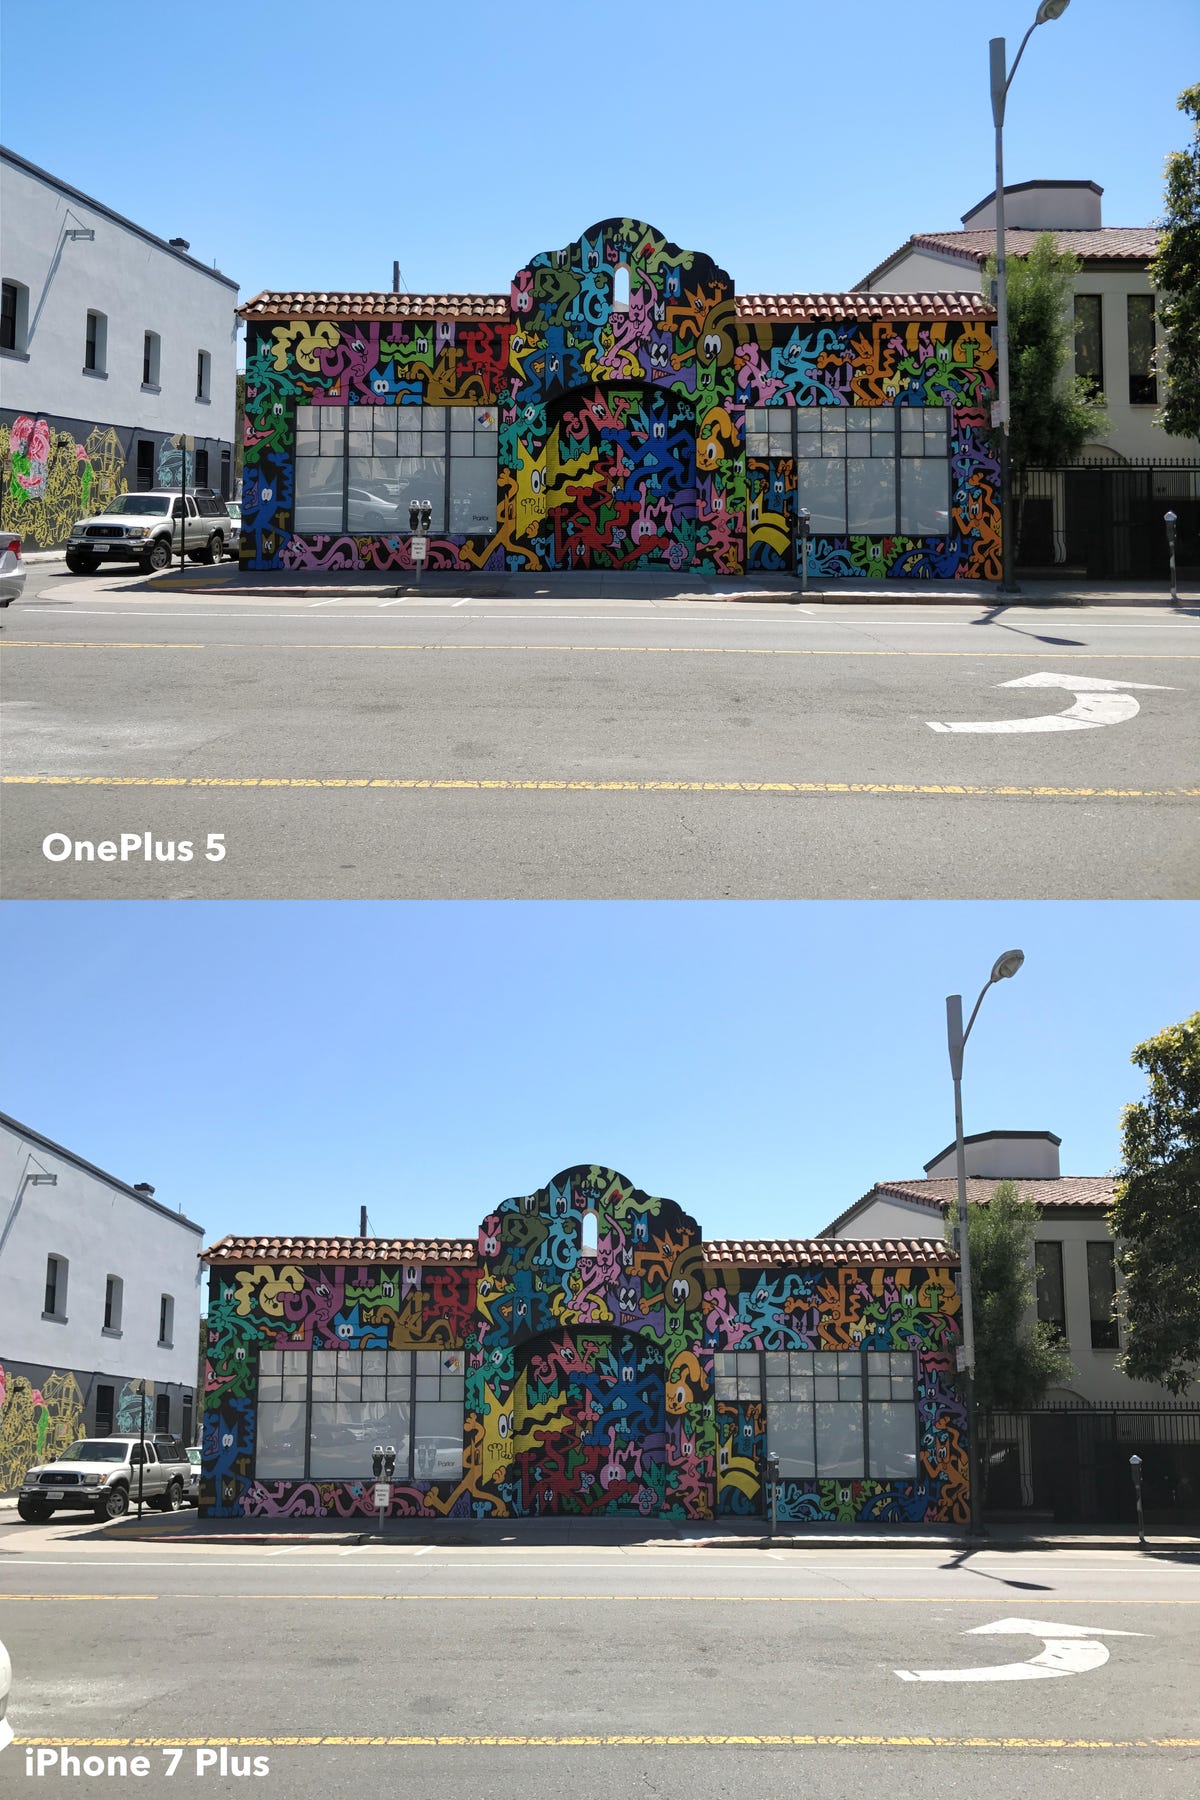 oneplus-5-cat-graffiti-compare